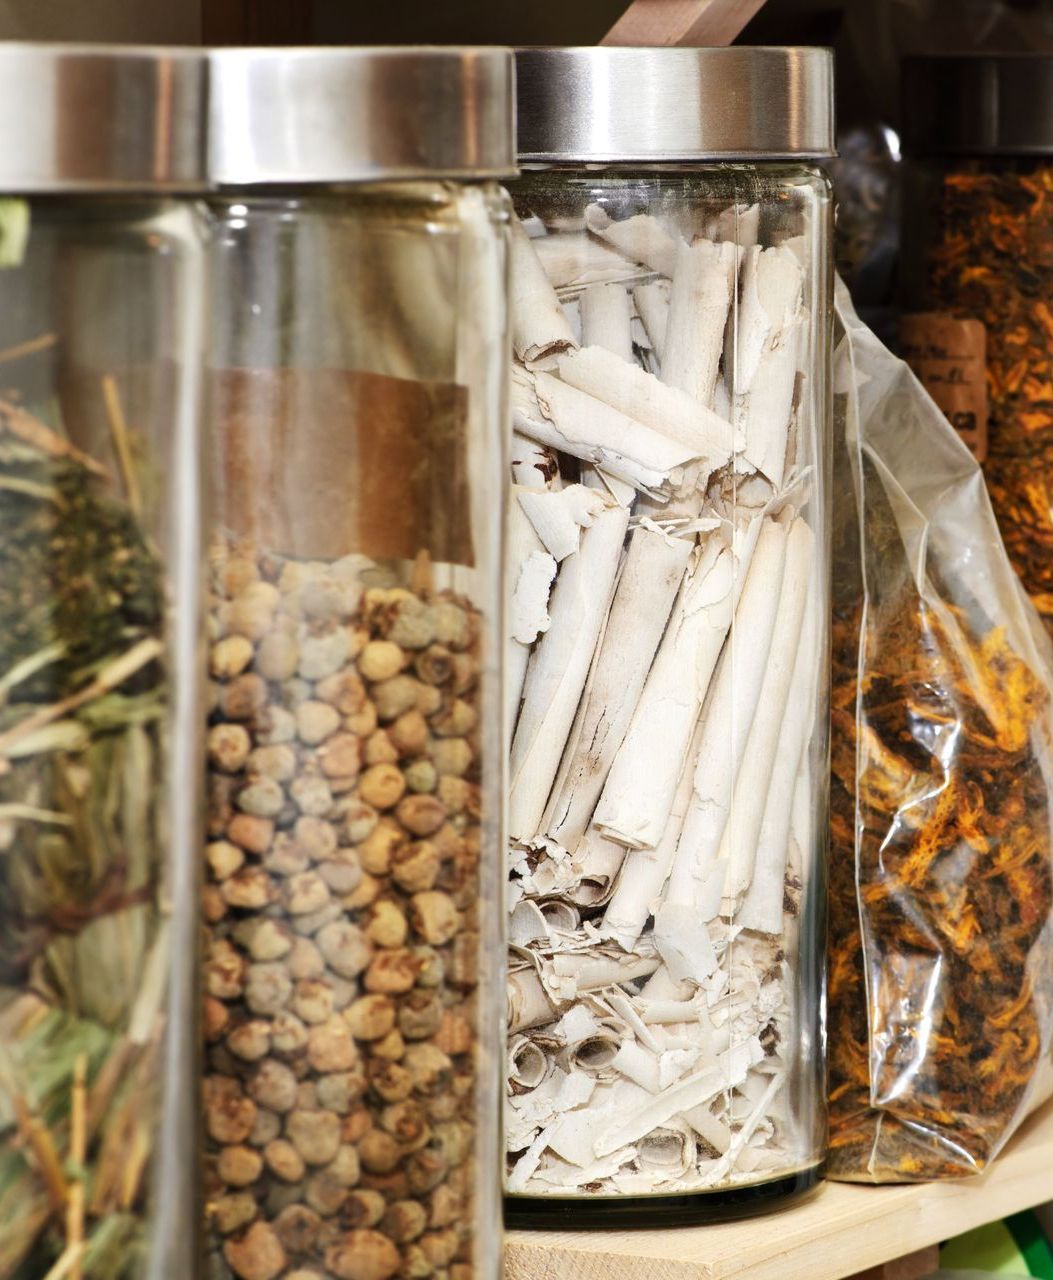 Jars filled with herbal medicine